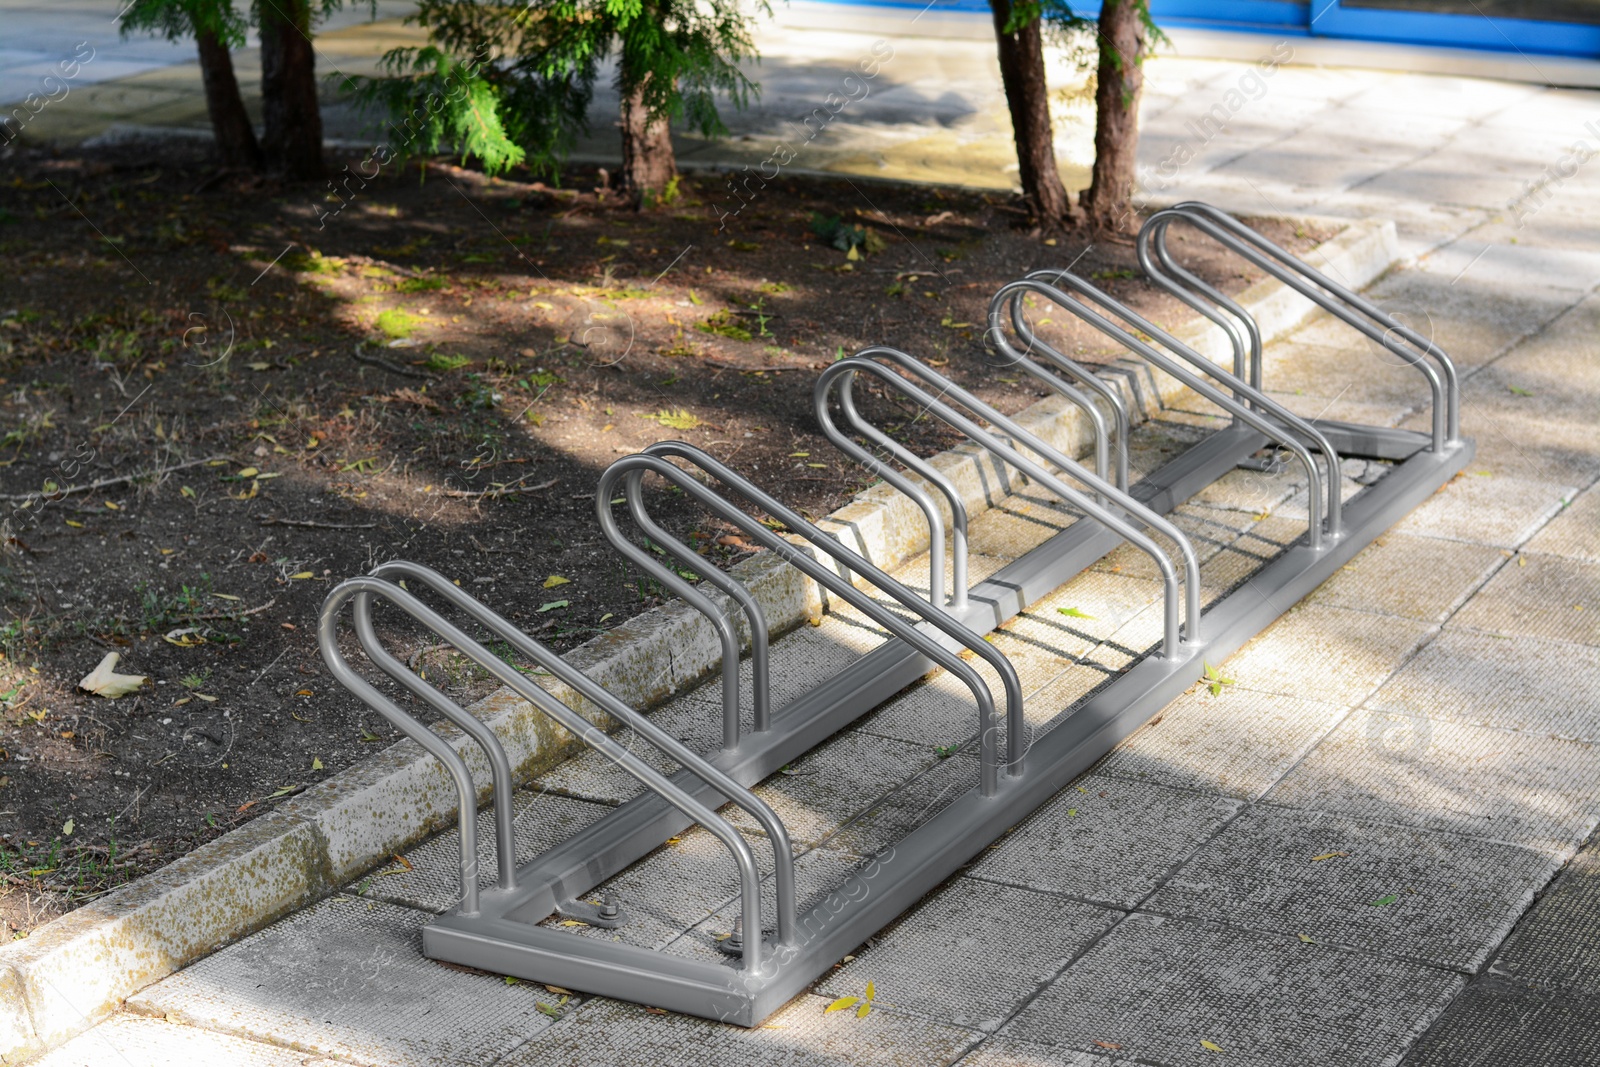 Photo of Metal bicycle parking rack on city street